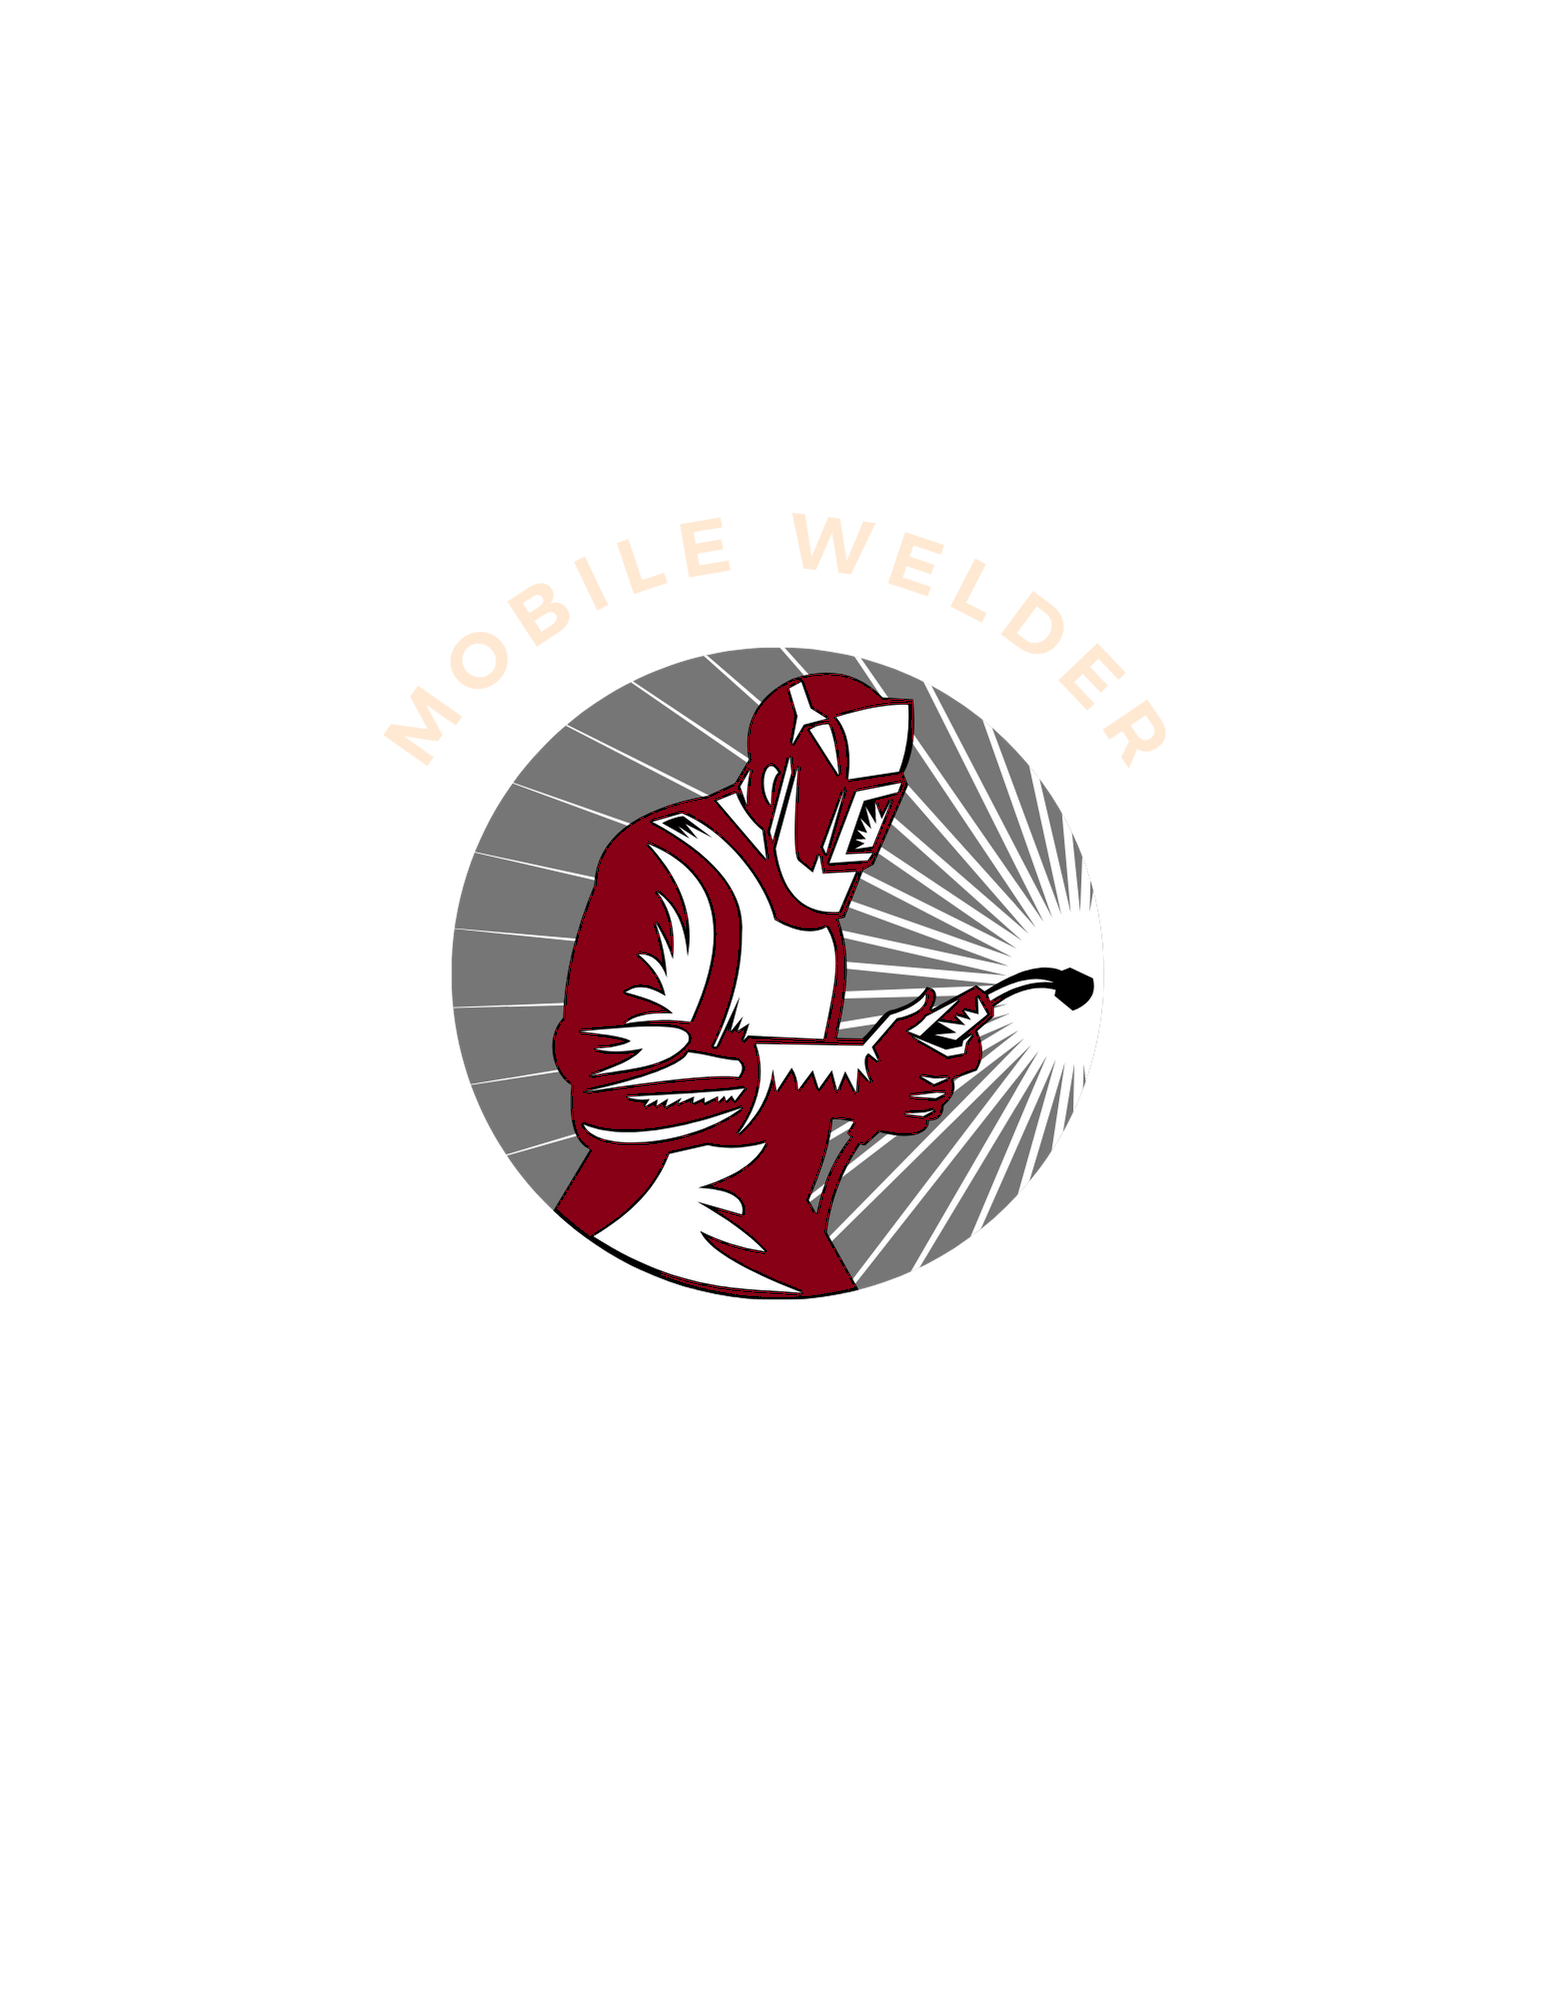 Mobile Welder Manchester